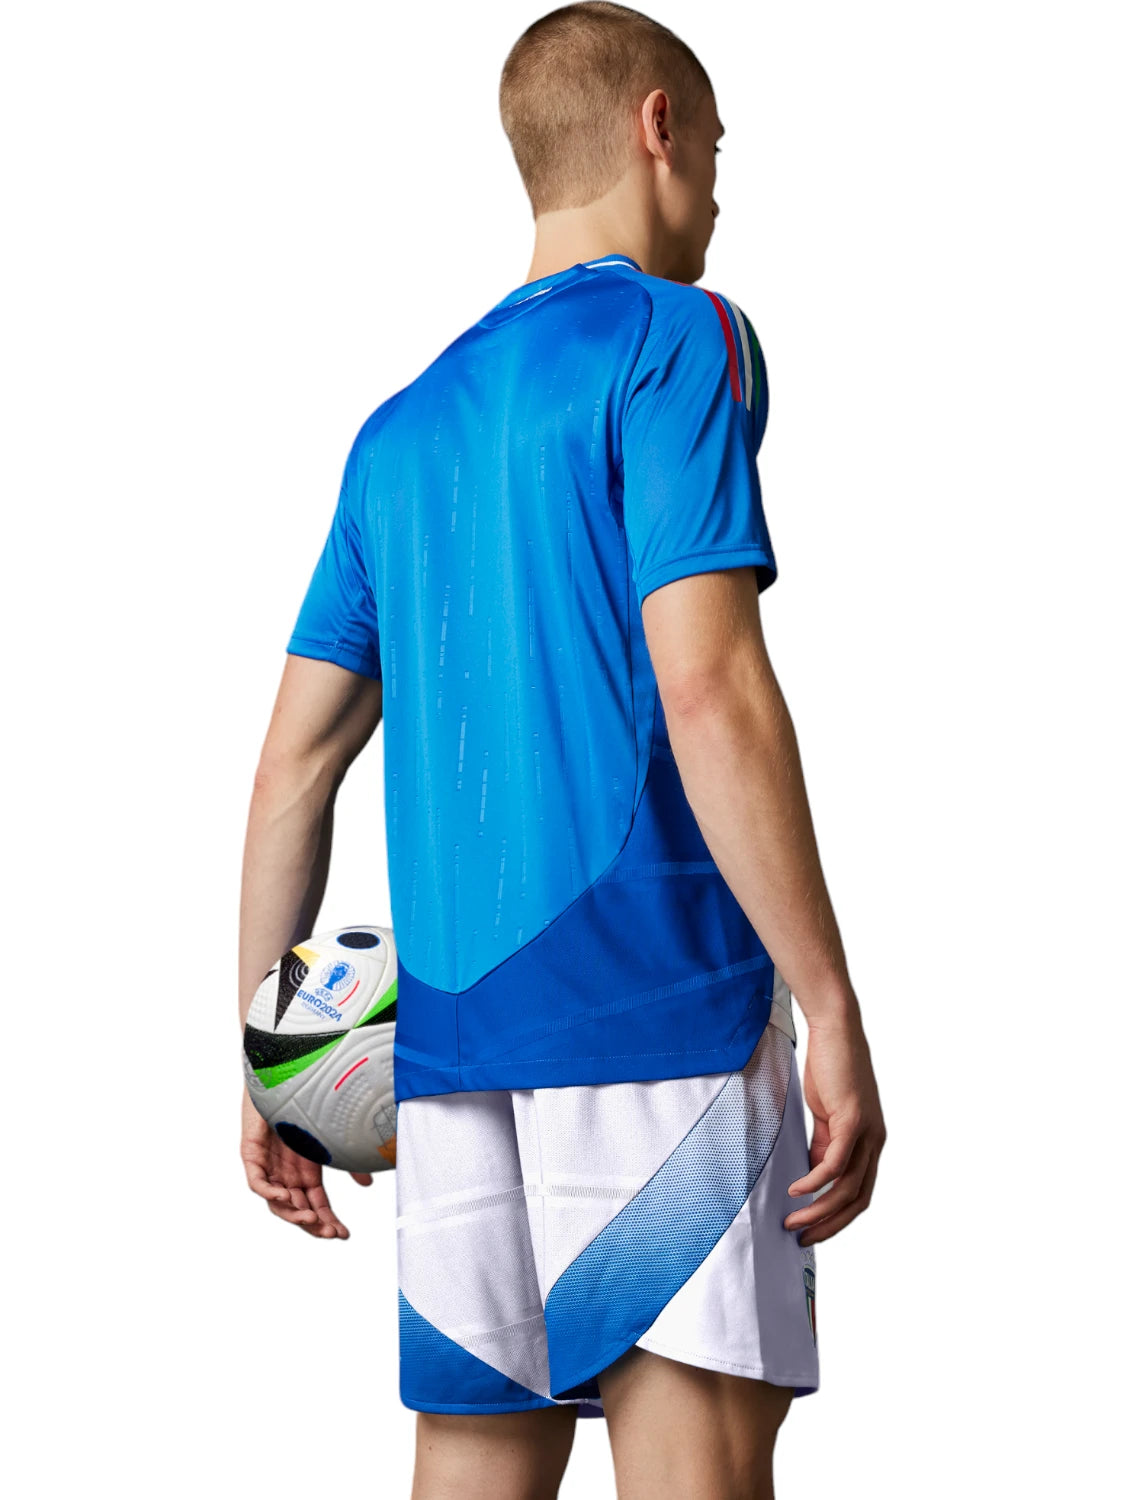 Maglia Ufficiale FIGC Italia Home-T-shirt-Adidas Originals-Vittorio Citro Boutique